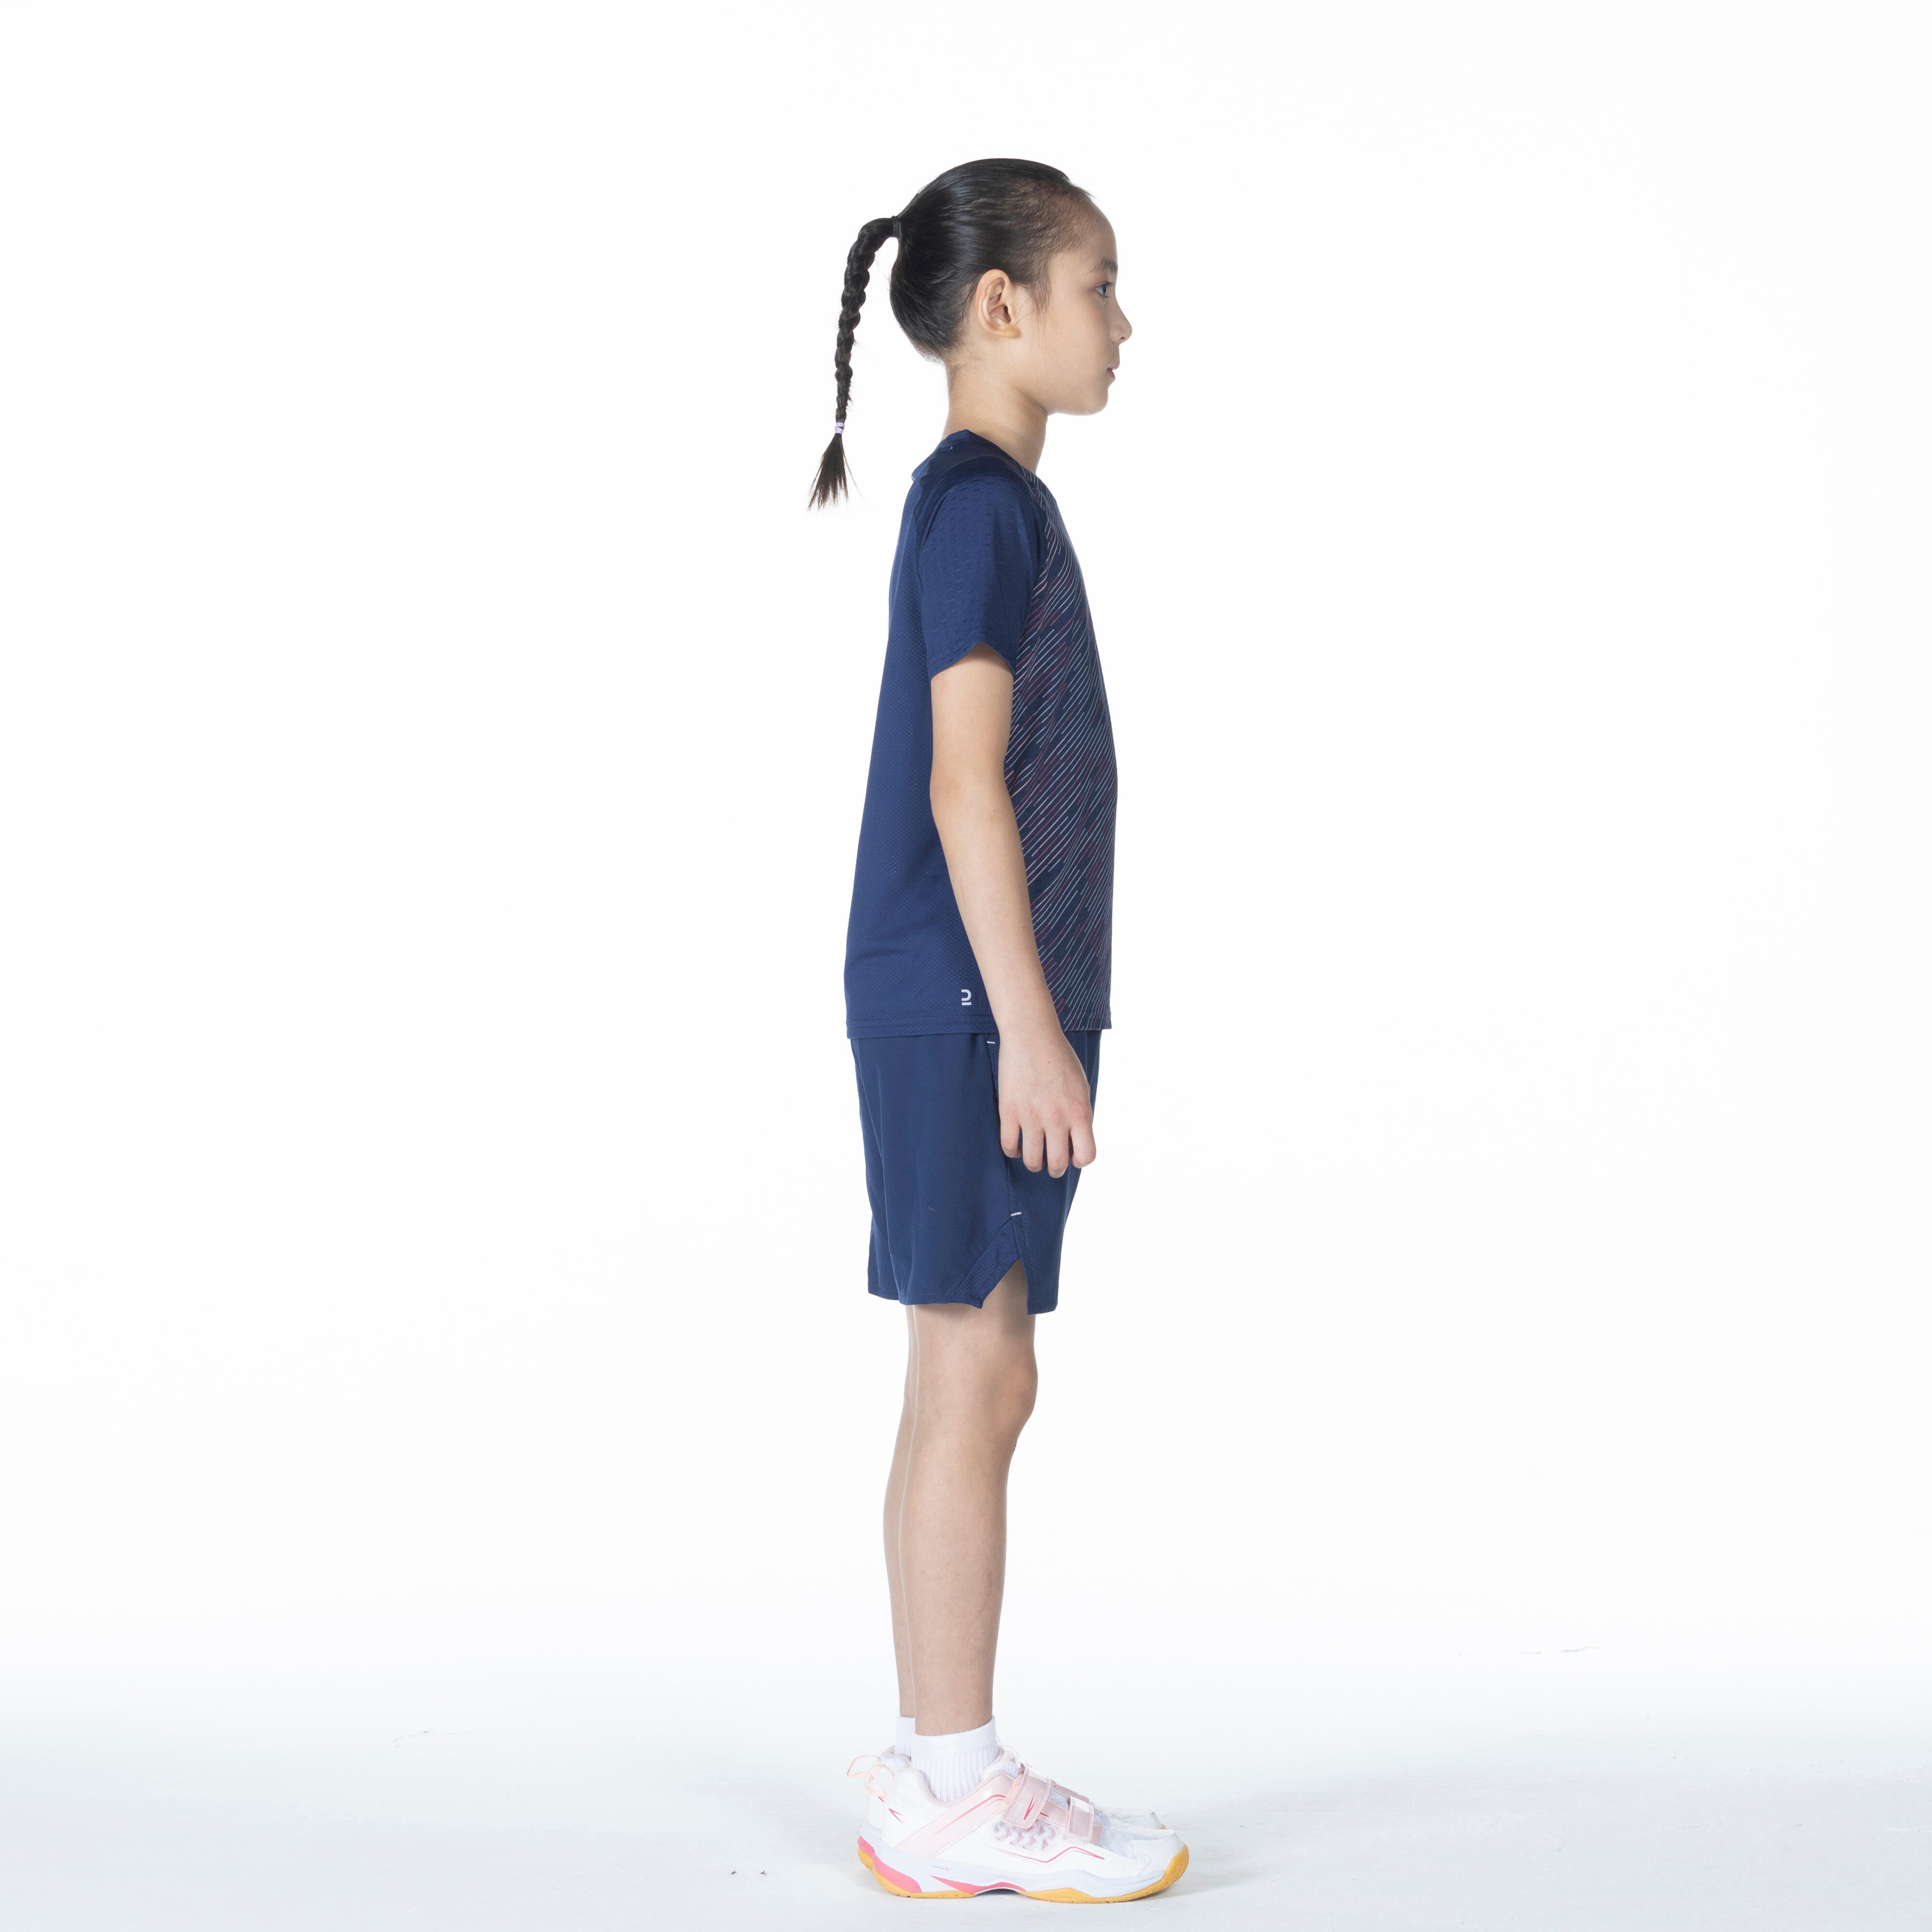 Children's tennis skirt suit girls badminton clothing dress female training  clothing quick-drying tennis clothing table tennis sports